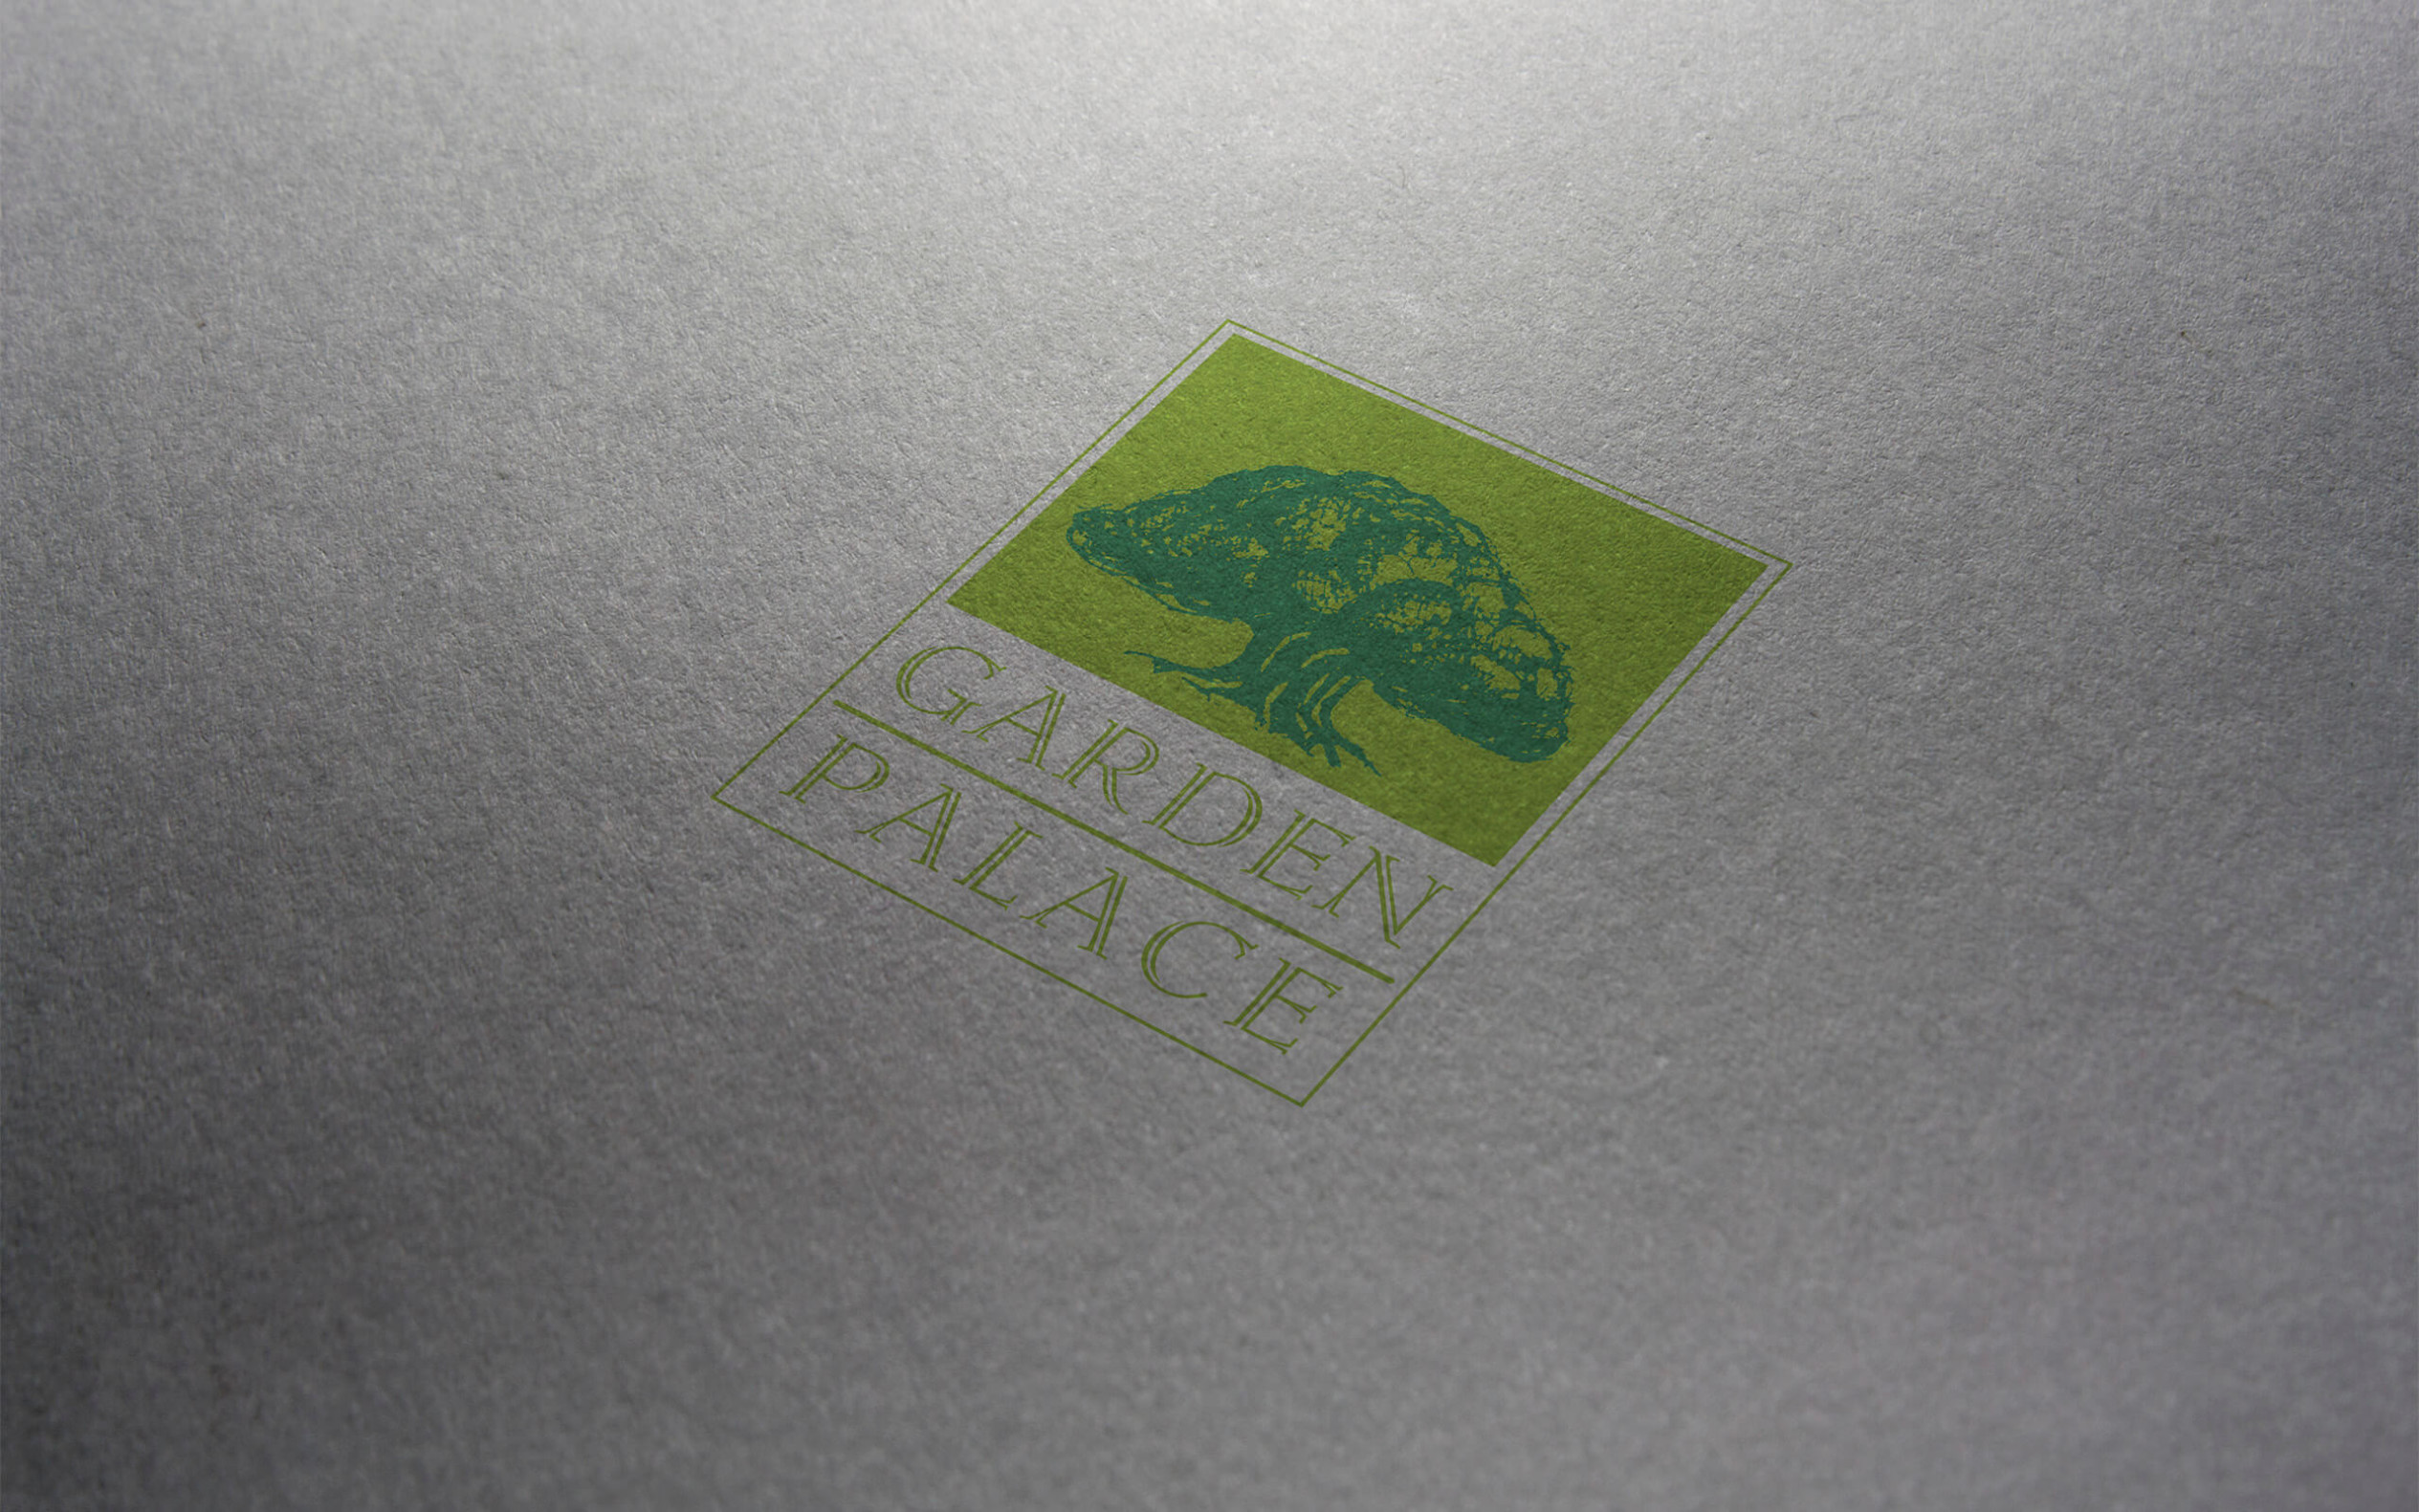 Гарден Палас дизайн логотип отель